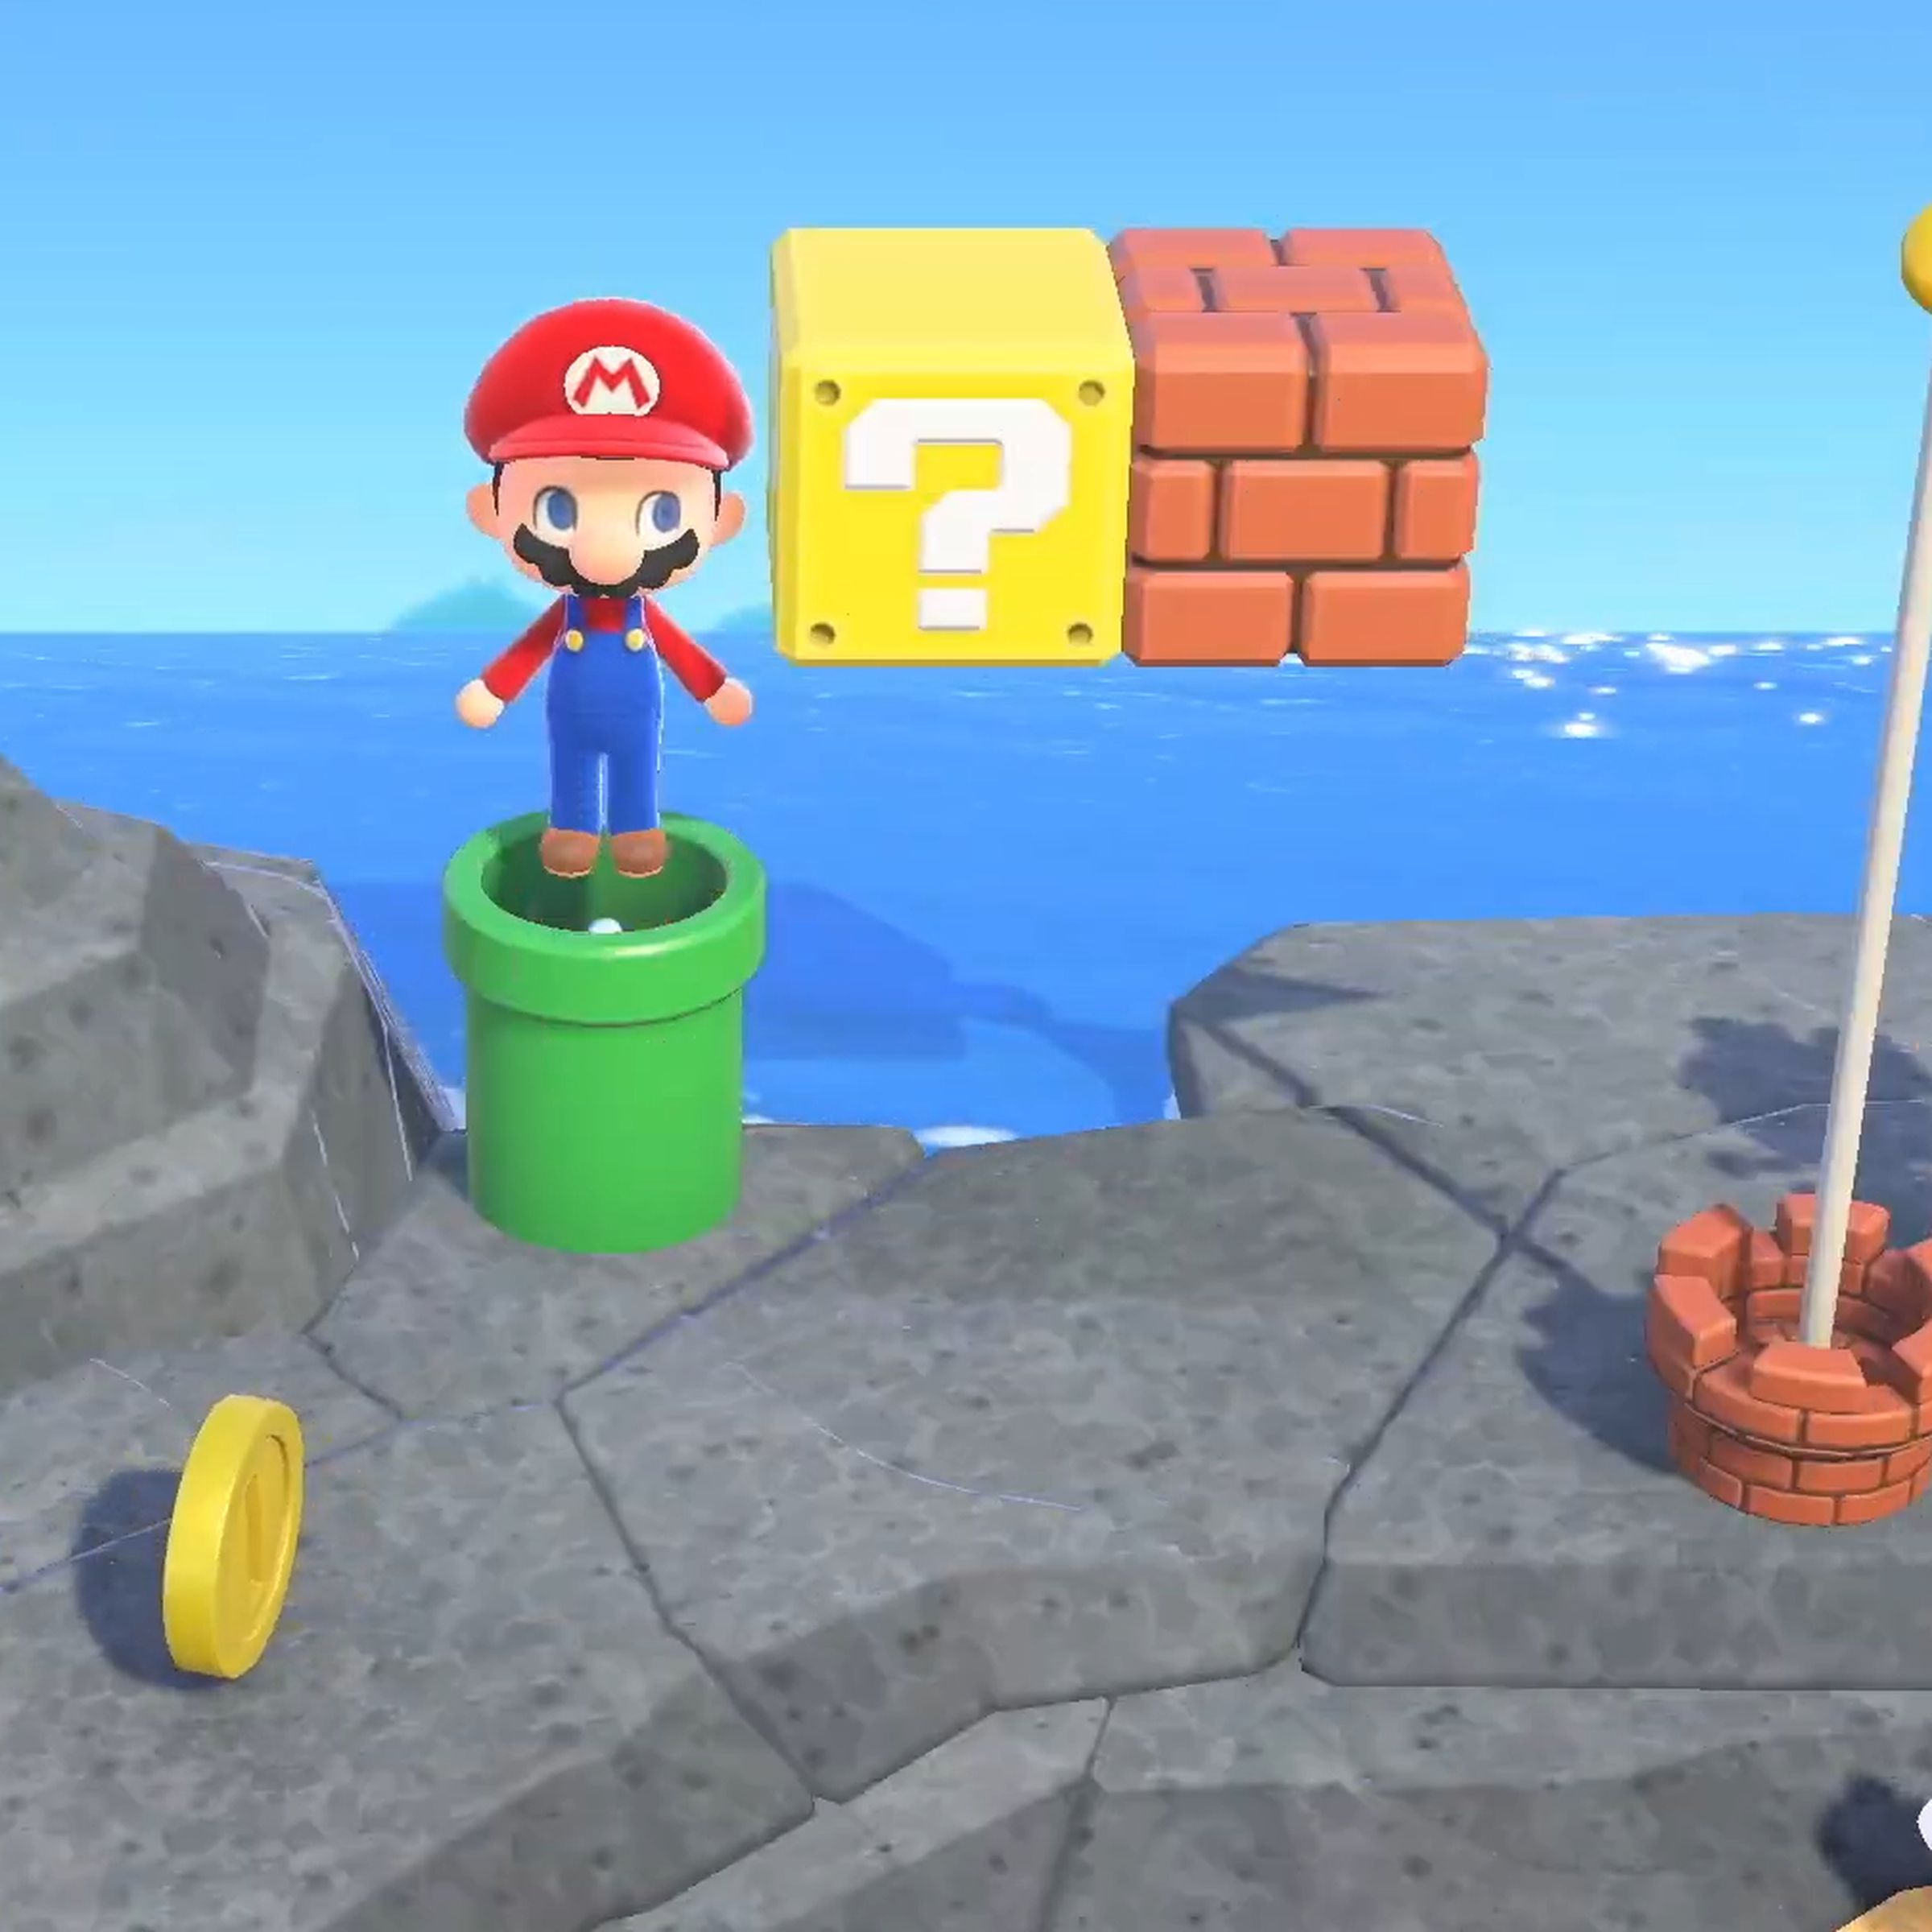 Super Mario items in Animal Crossing: New Horizons